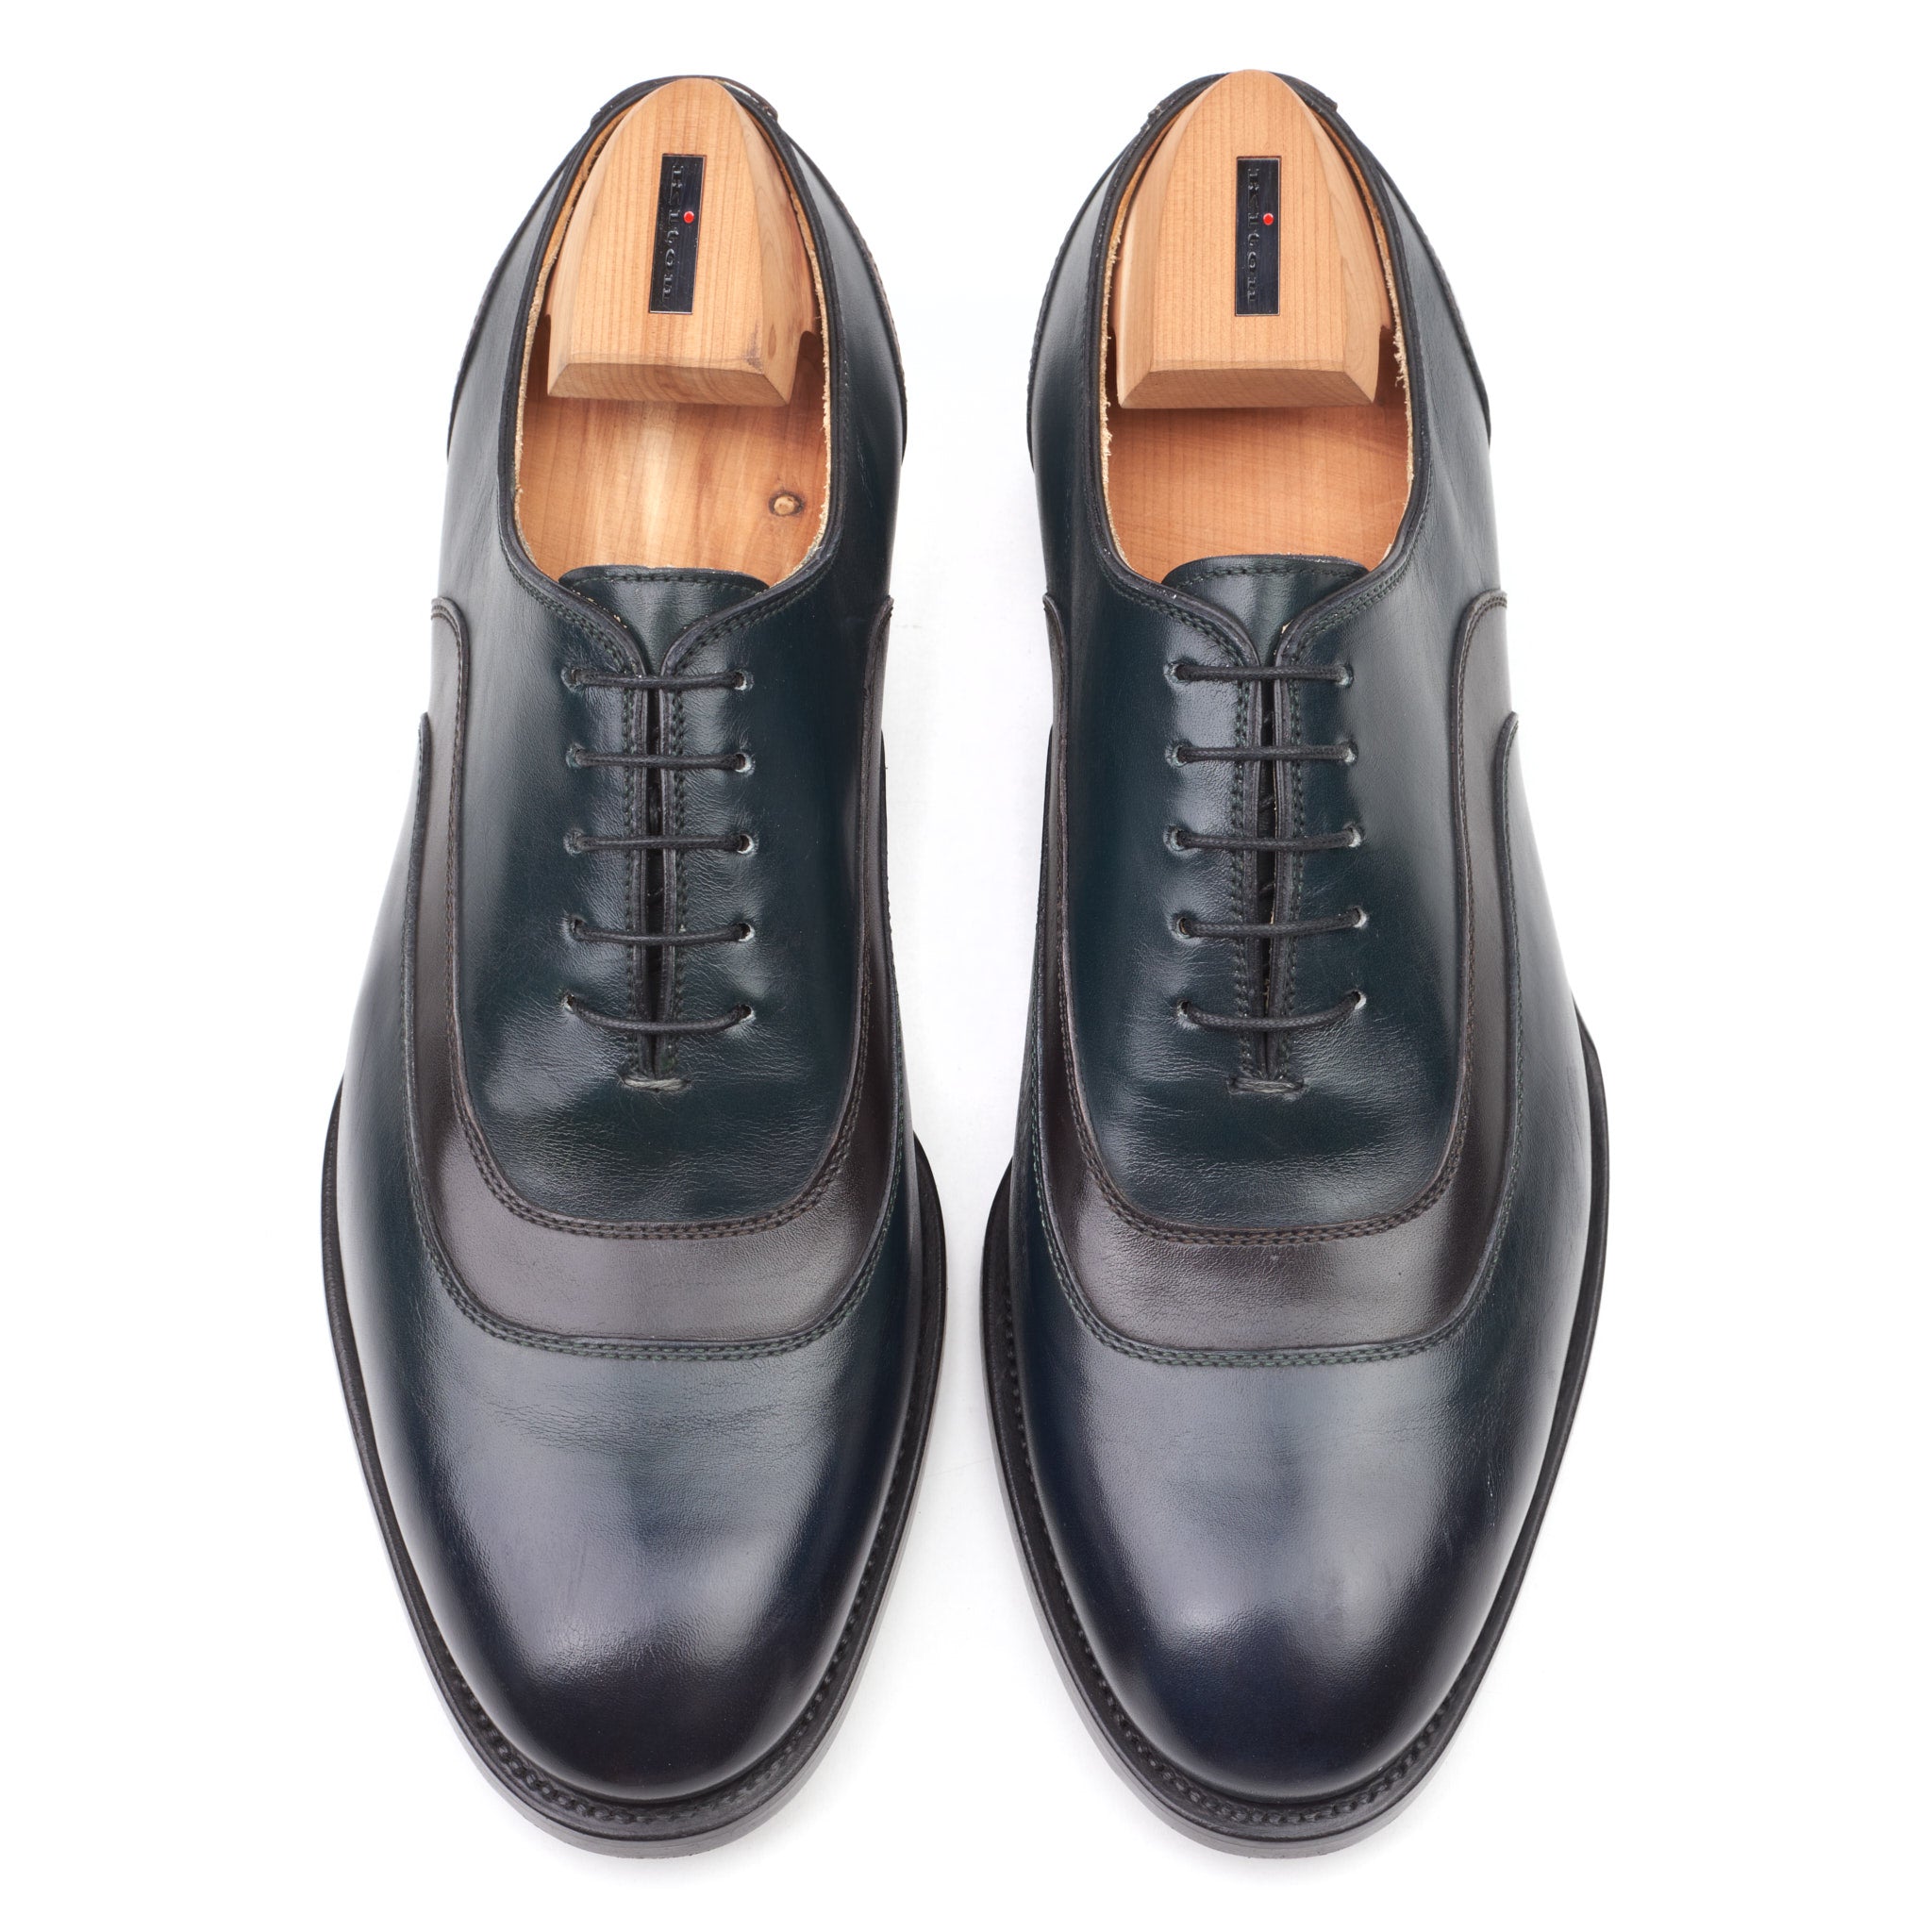 KITON Handmade Green-Black Calfskin Leather Oxford Shoes US 9 NEW Box